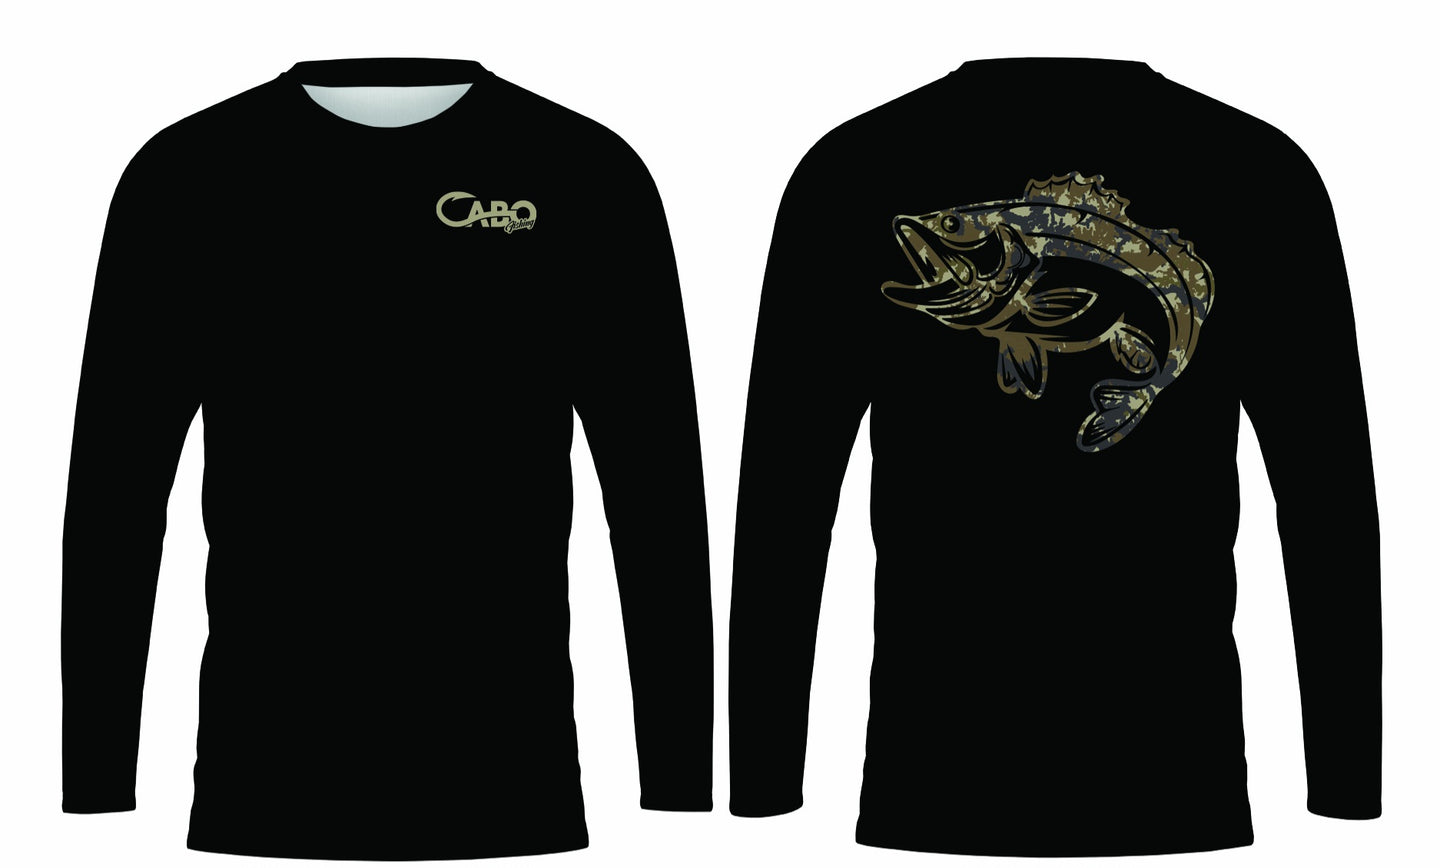 CABO Black Bass Sunshirt